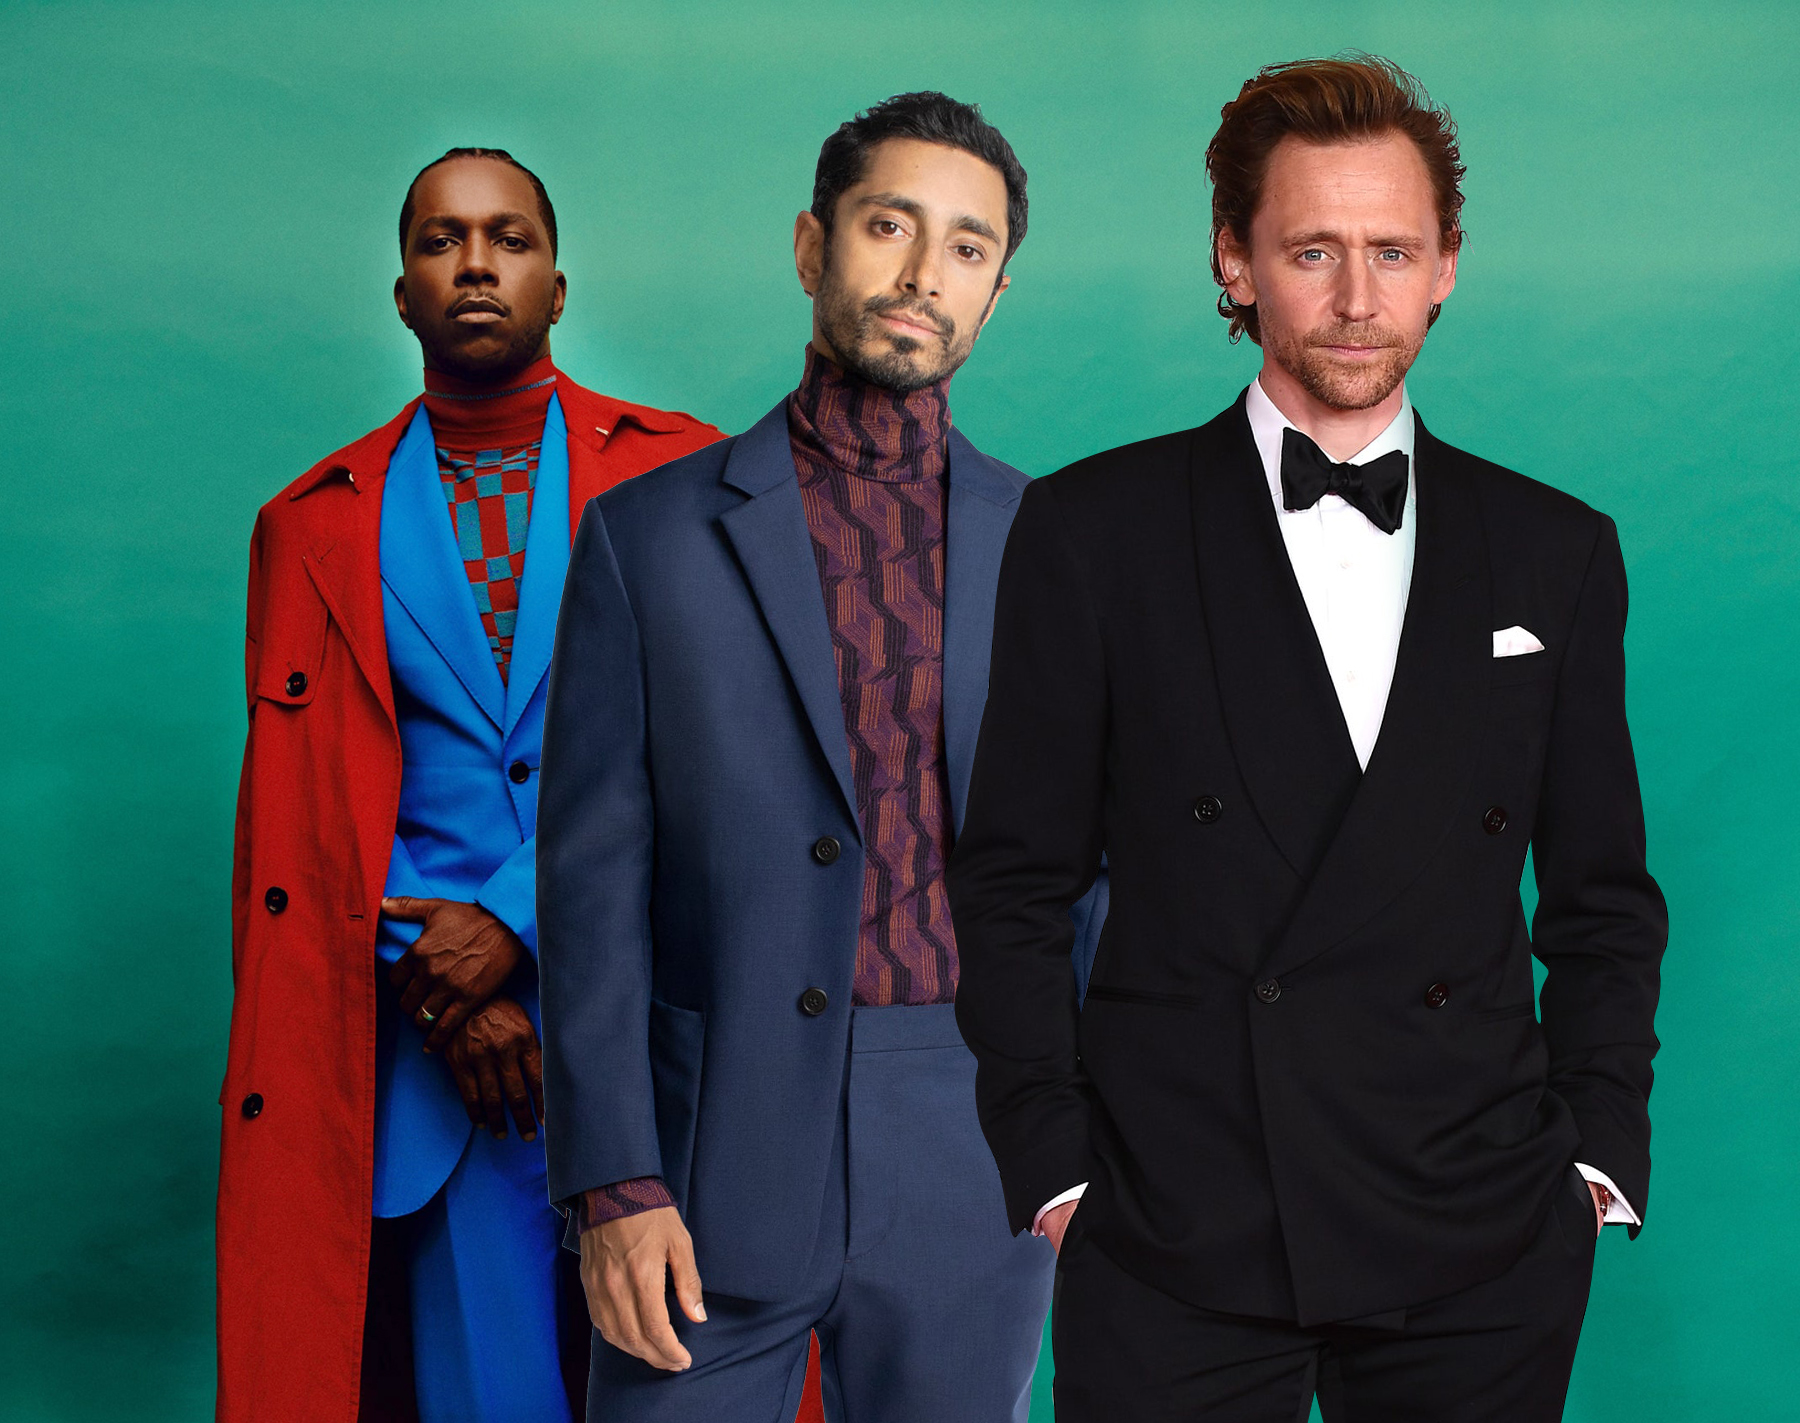 BAFTAs 2021: Meet the best dressed stars